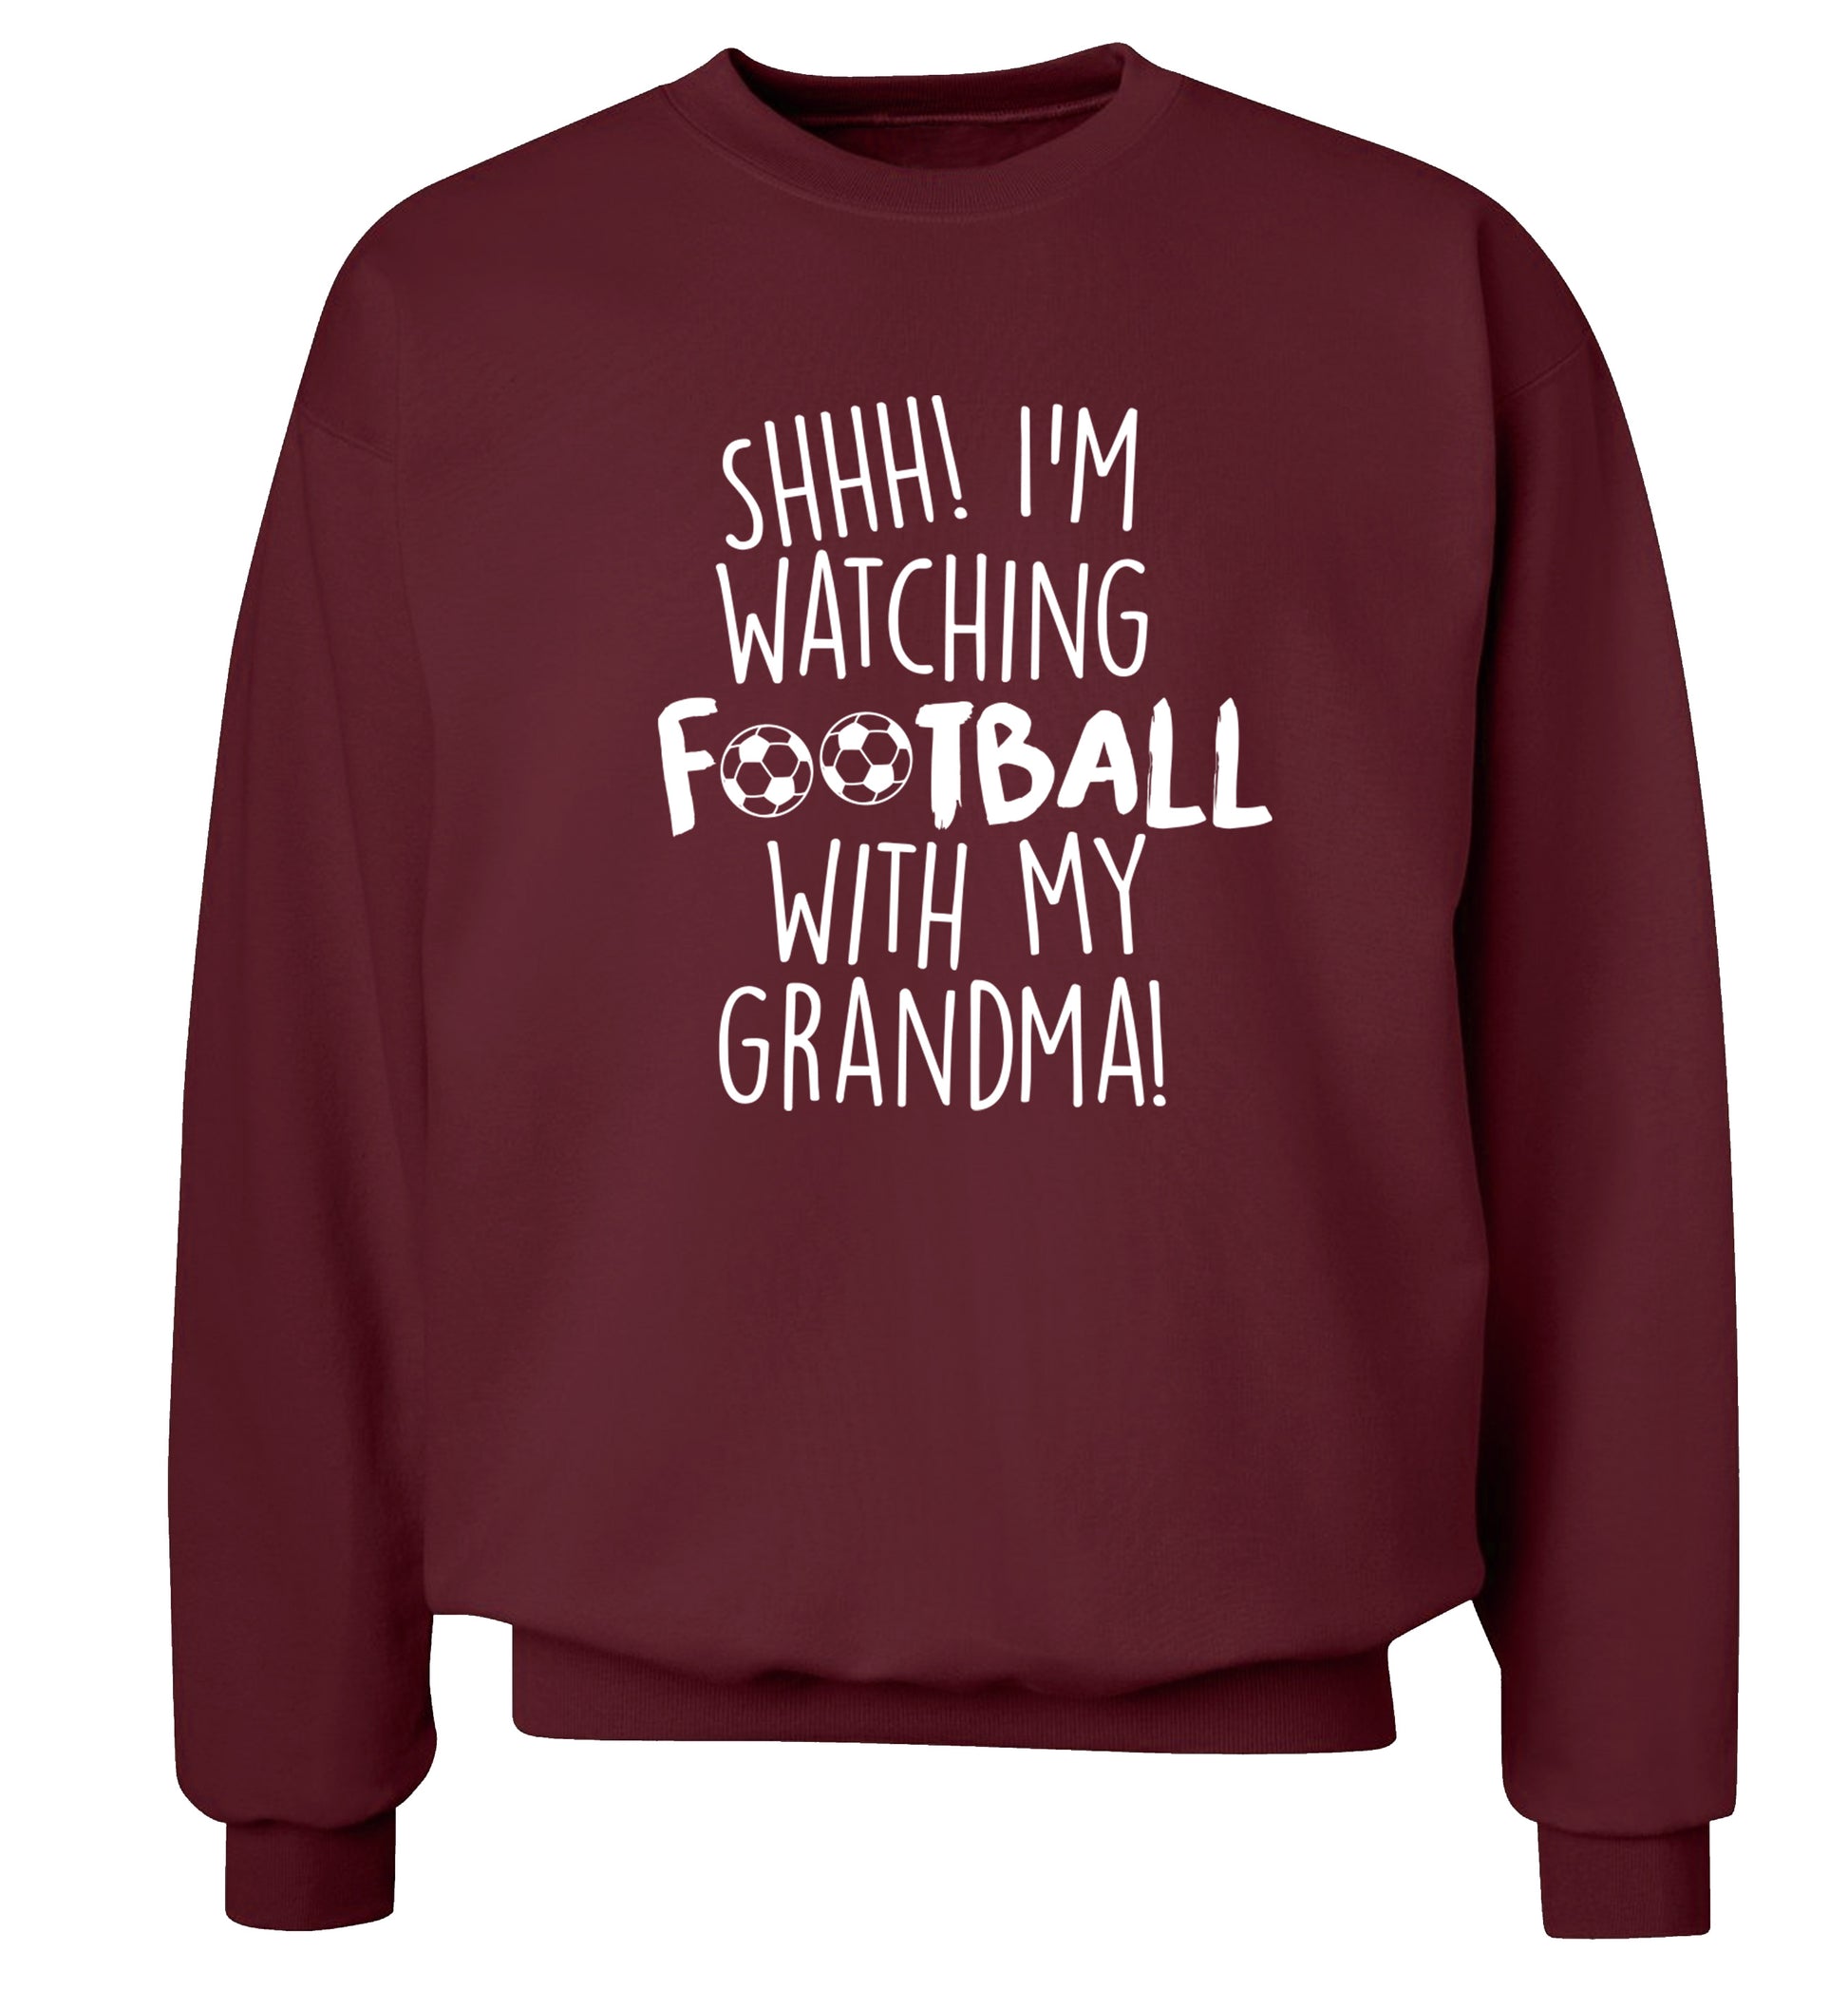 Shhh I'm watching football with my grandma Adult's unisexmaroon Sweater 2XL